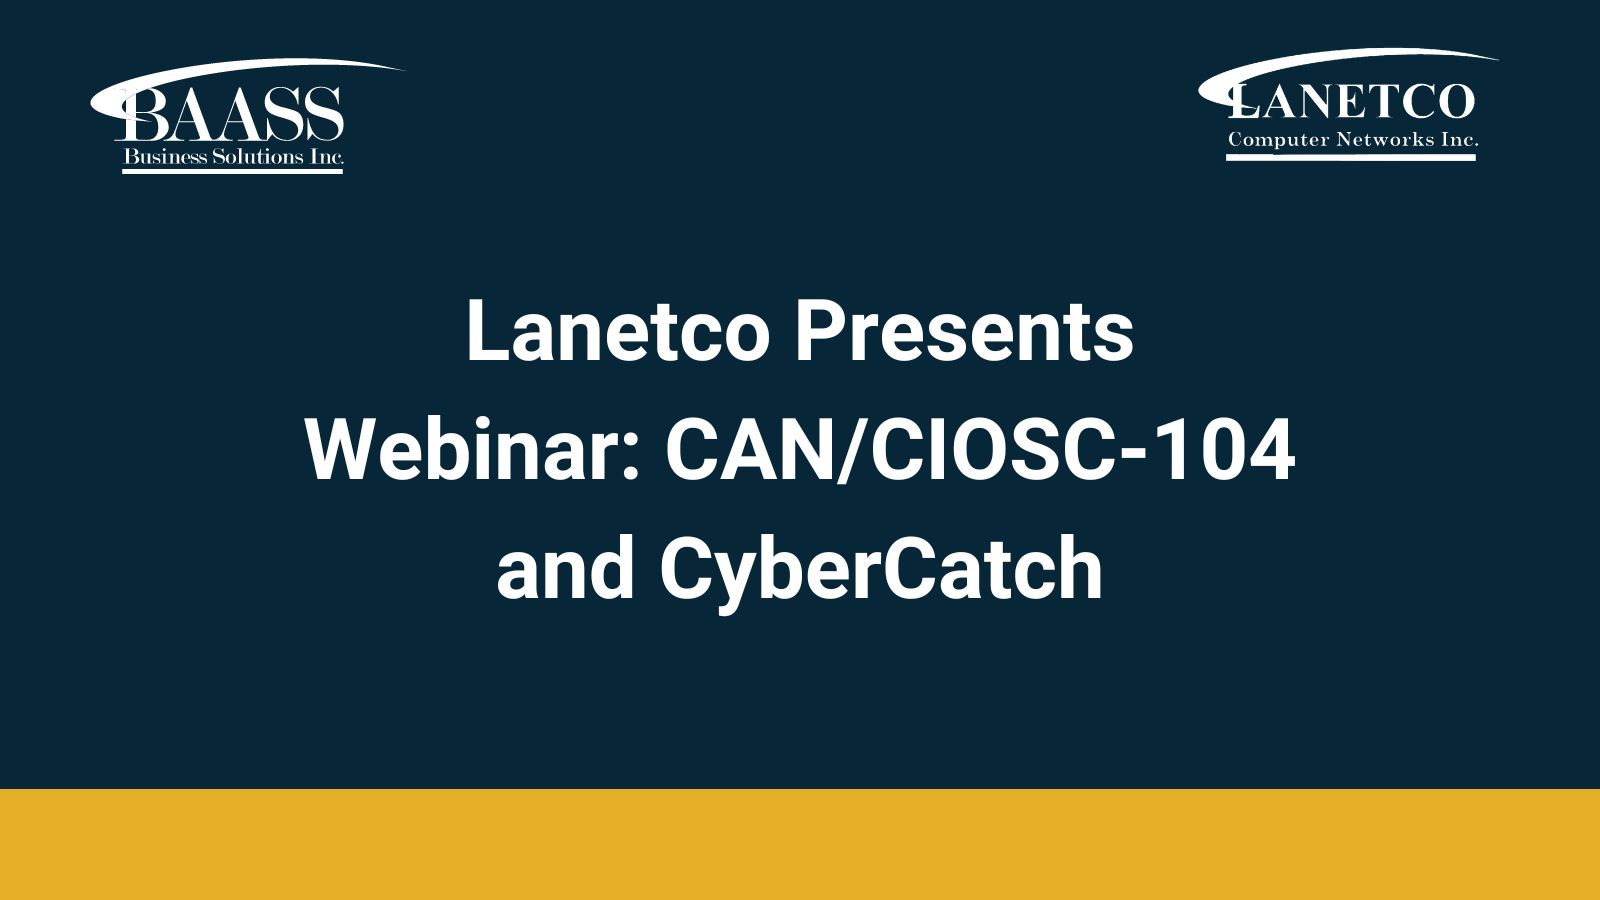 Lanetco Presents Webinar: CAN/CIOSC-104 and CyberCatch